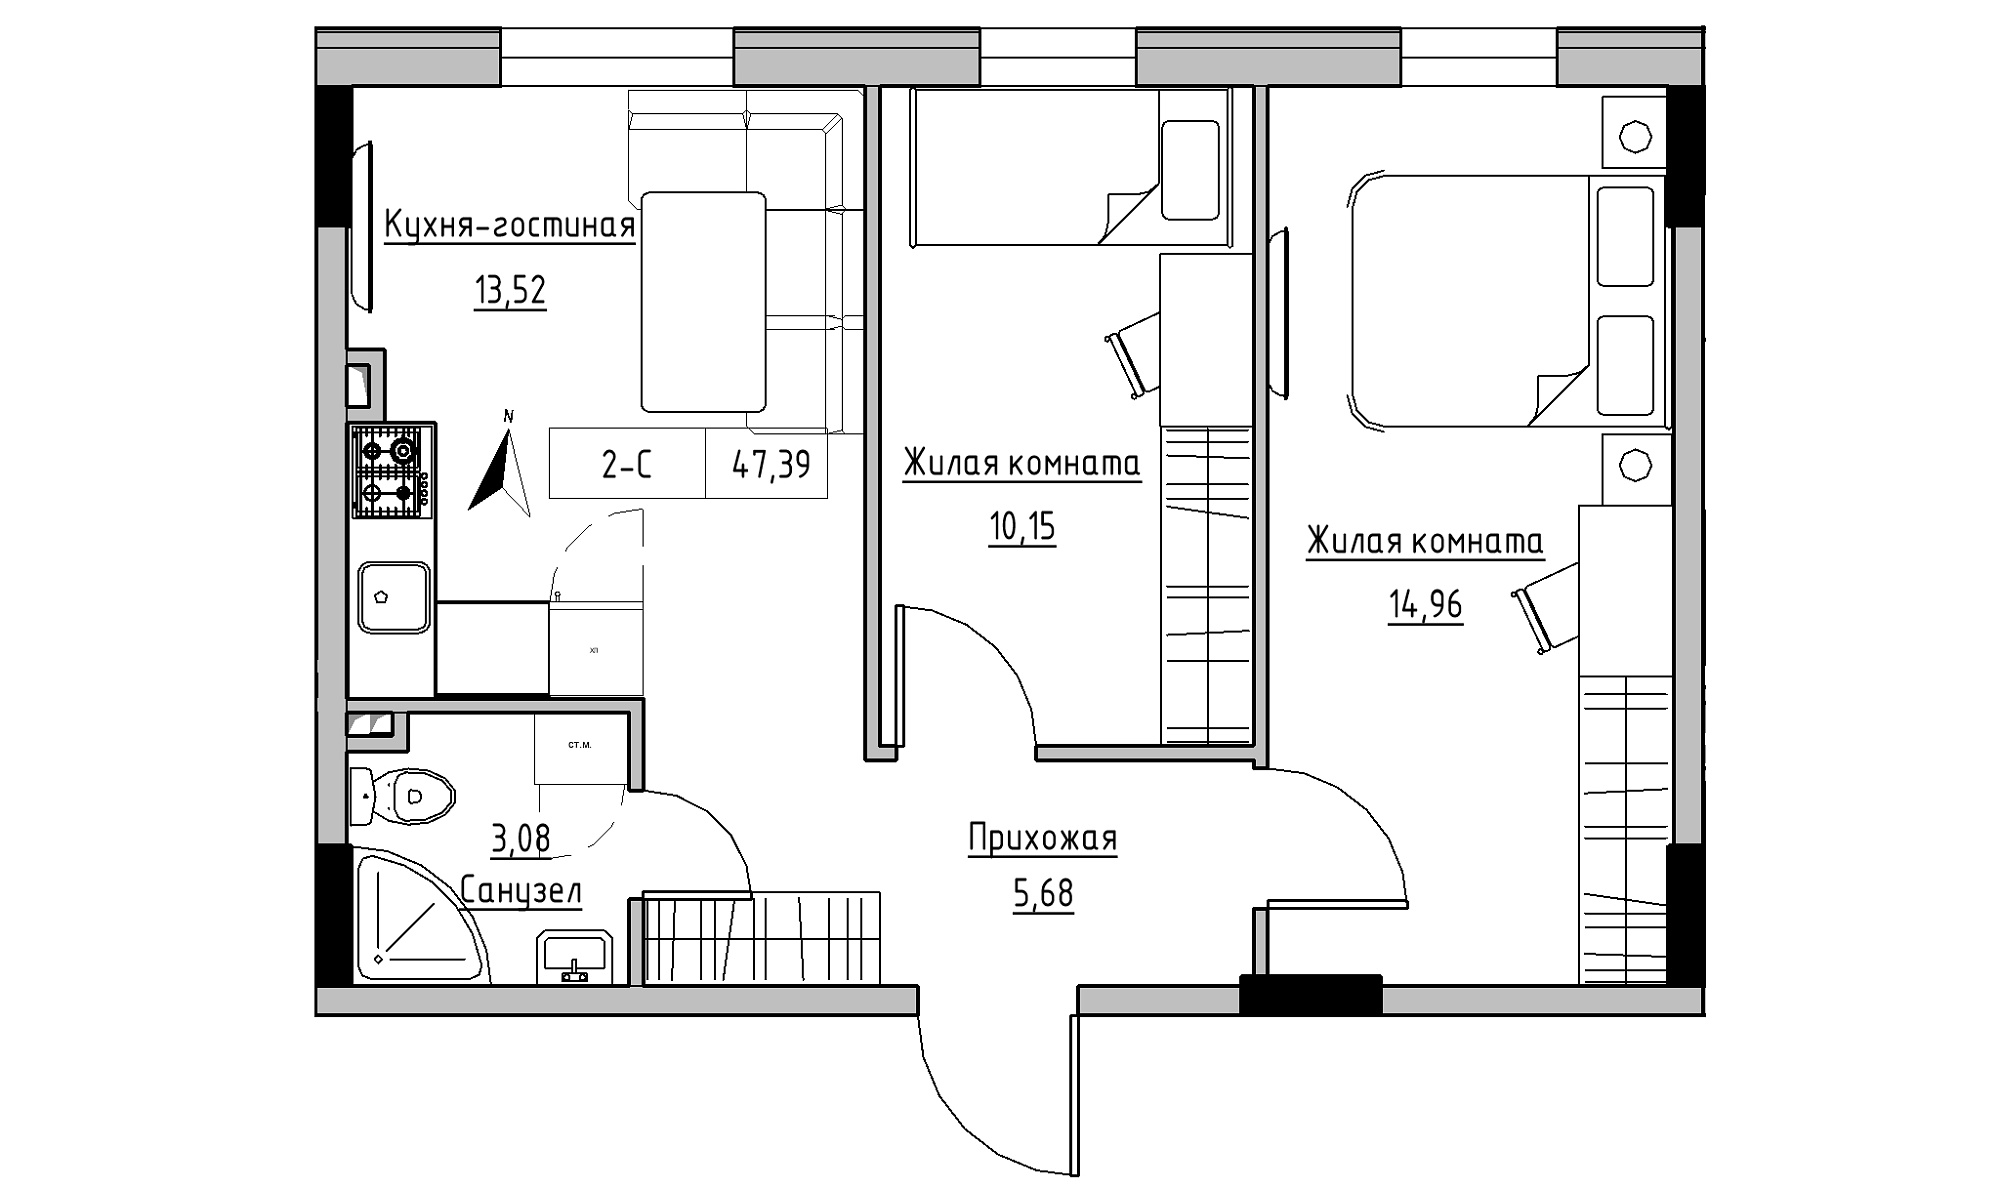 Planning 2-rm flats area 47.39m2, KS-025-01/0009.